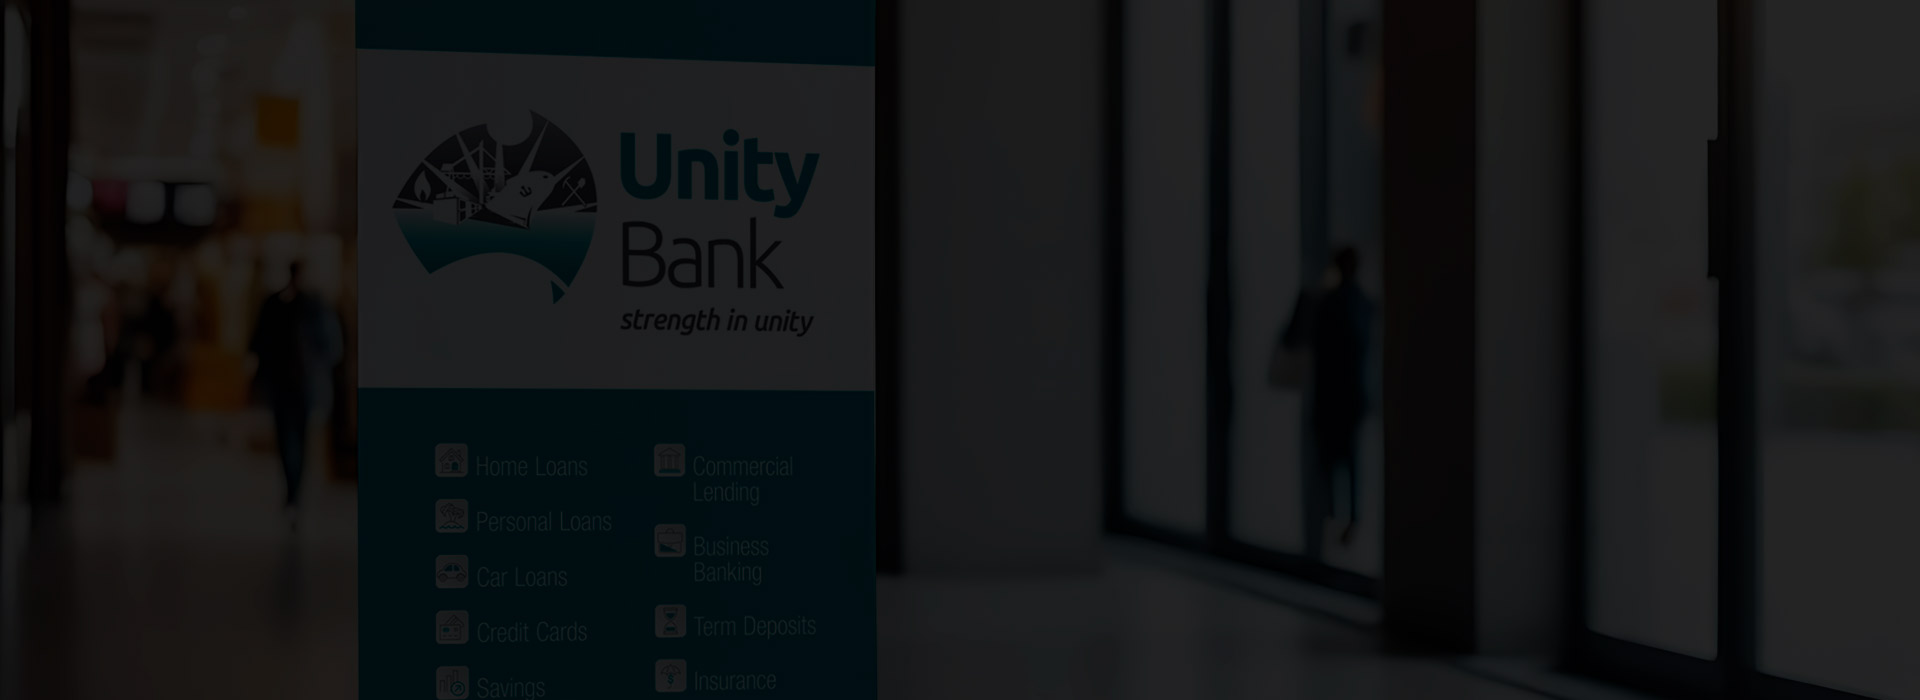 Unity Bank branding and design